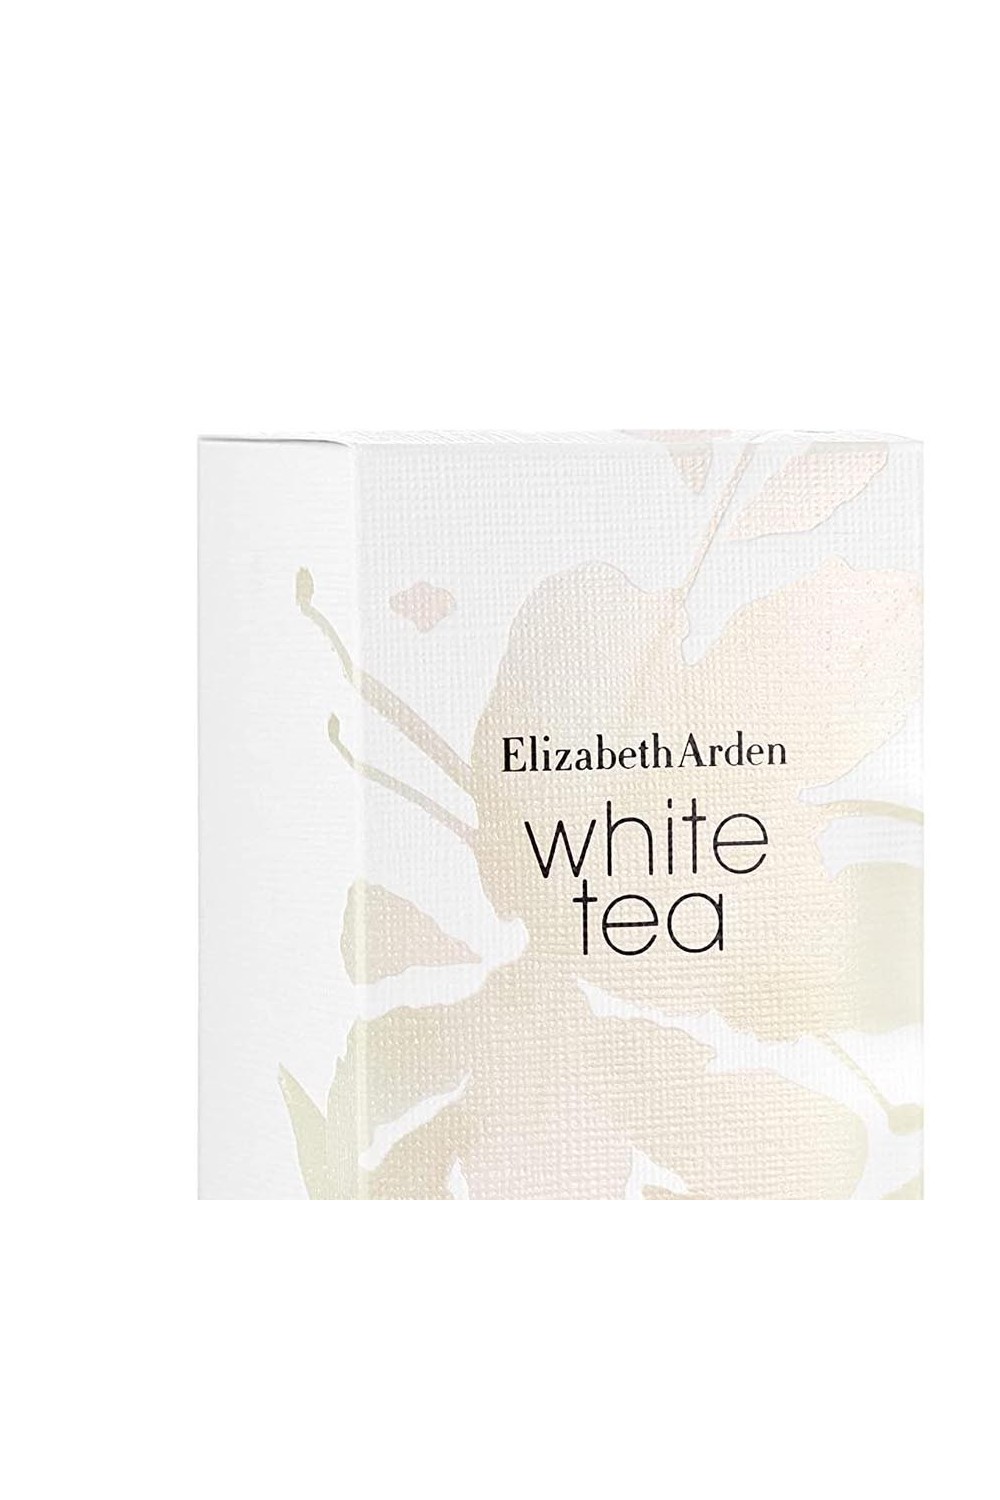 Elizabeth Arden White Tea Eau De Toilette 30ml Spray